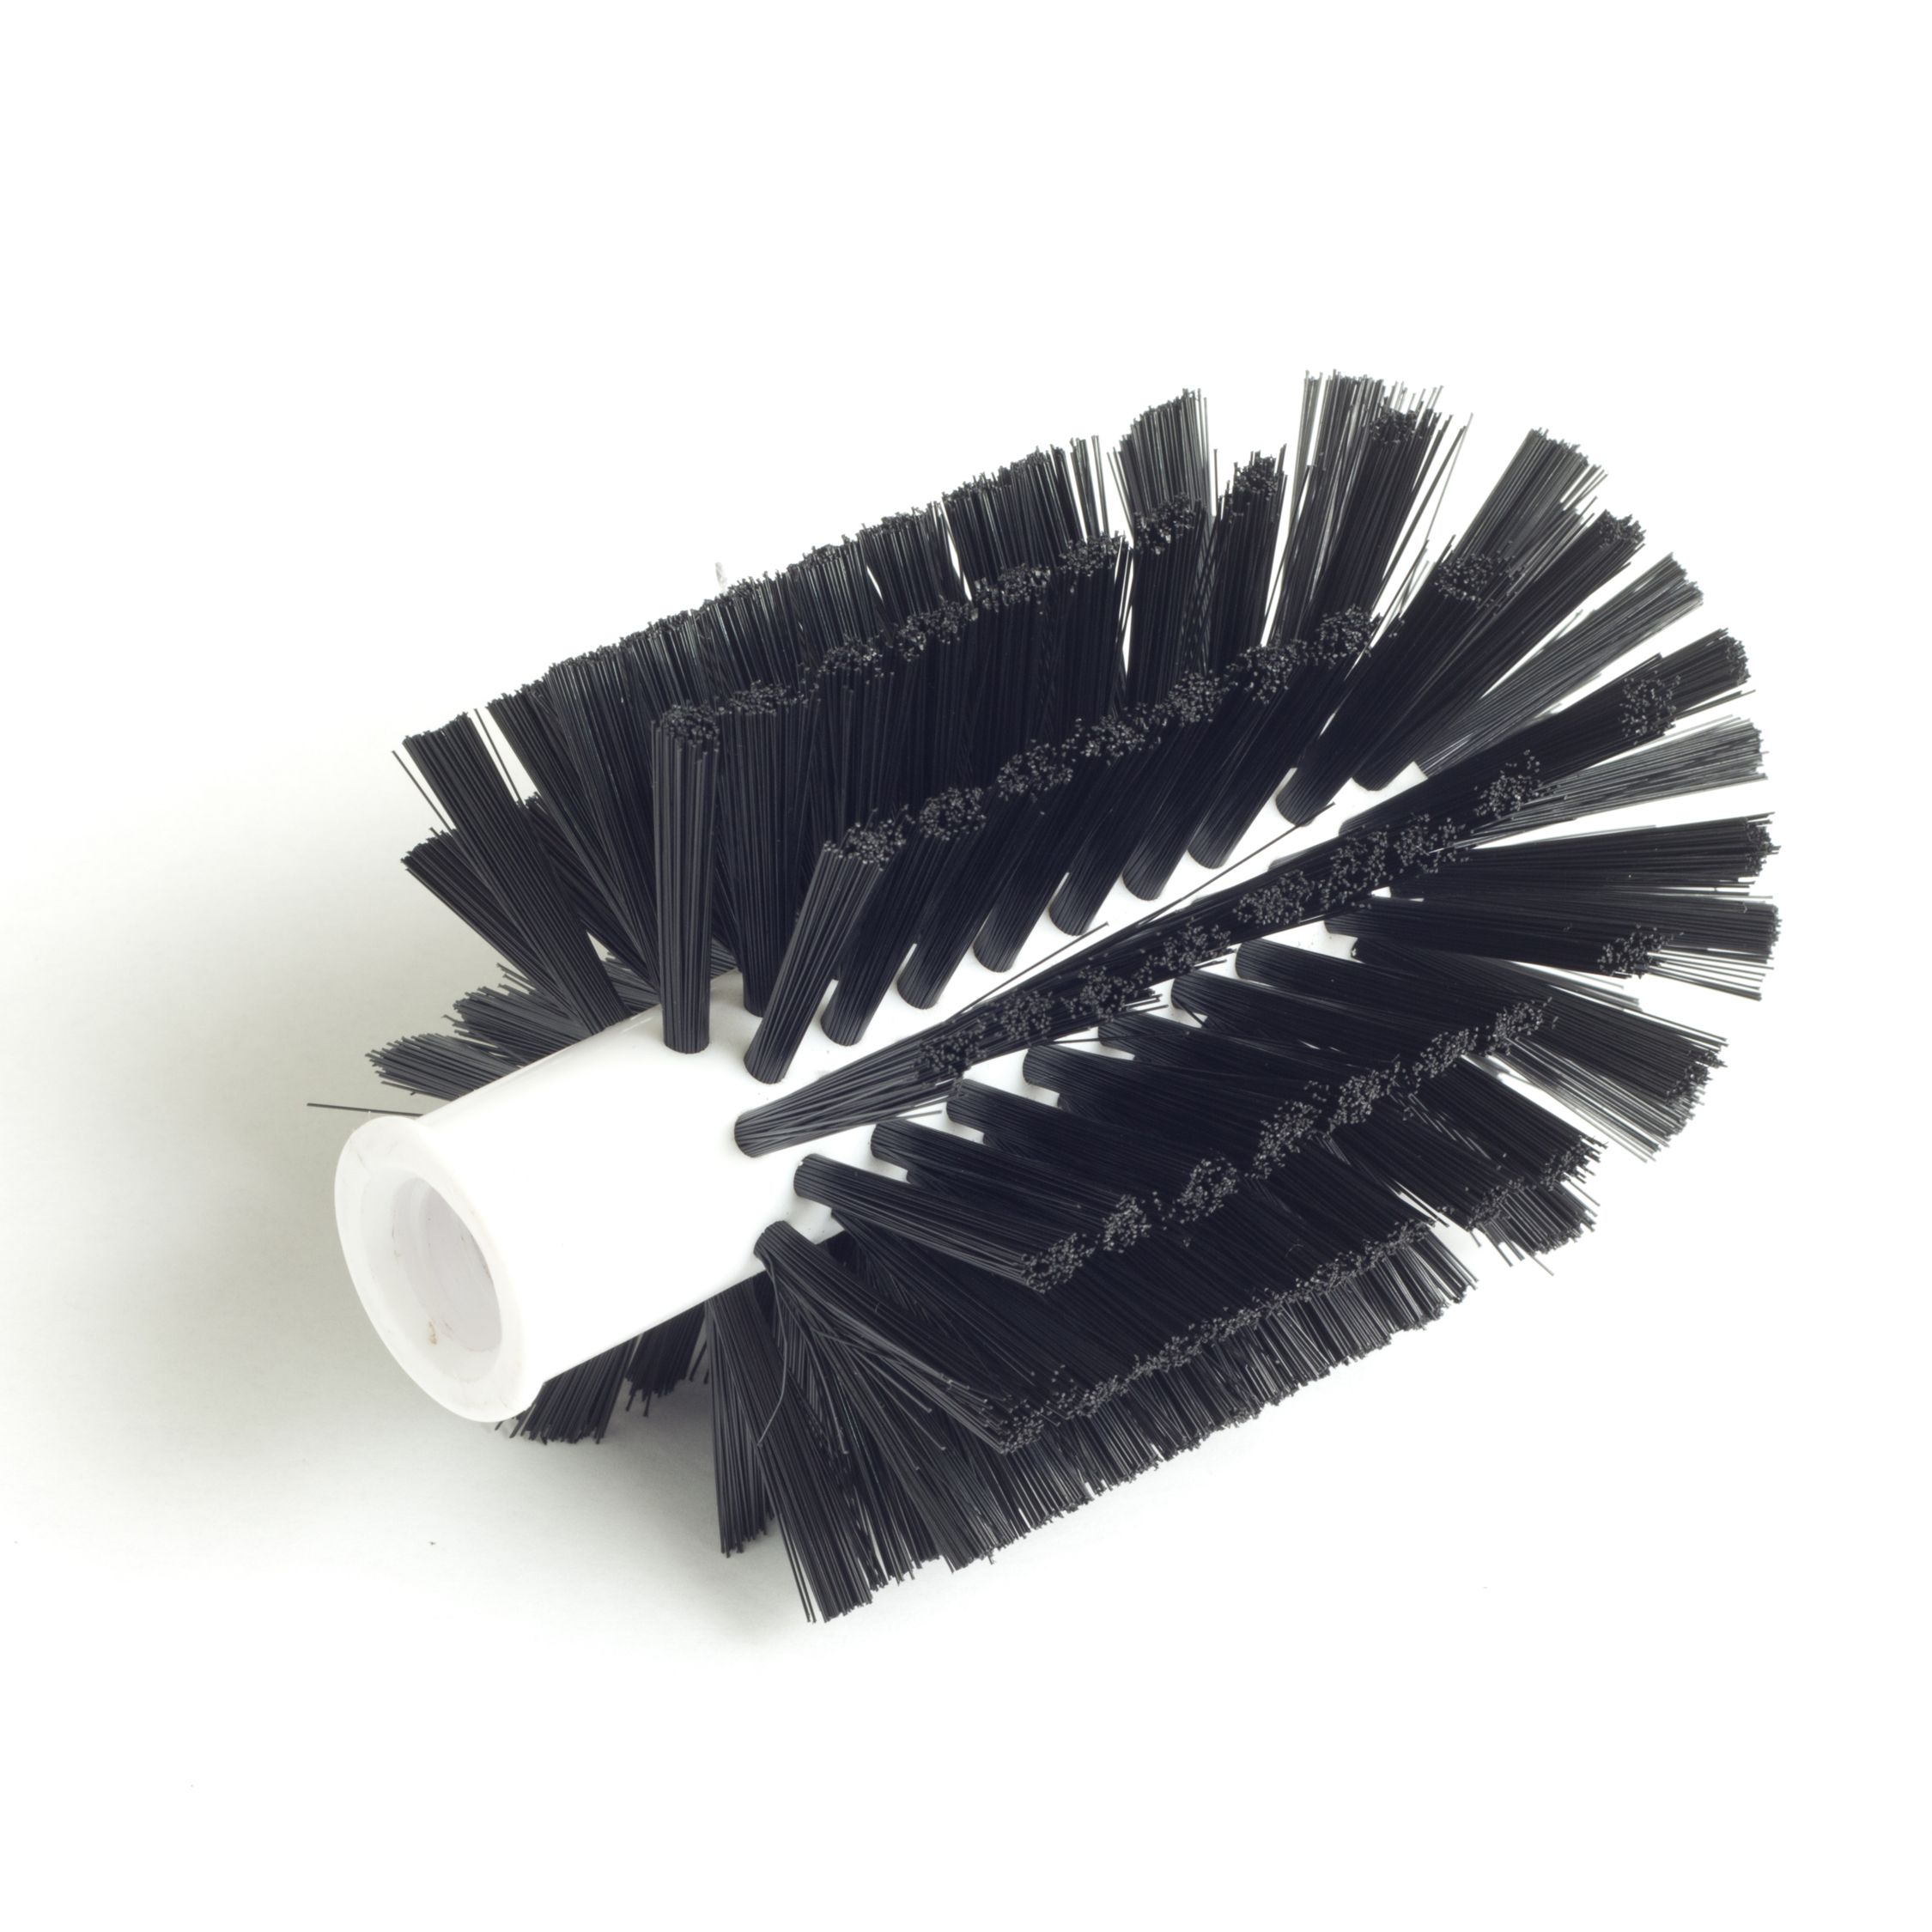 Ерш HACCPER для мытья канализационных трапов, 101 мм, черный